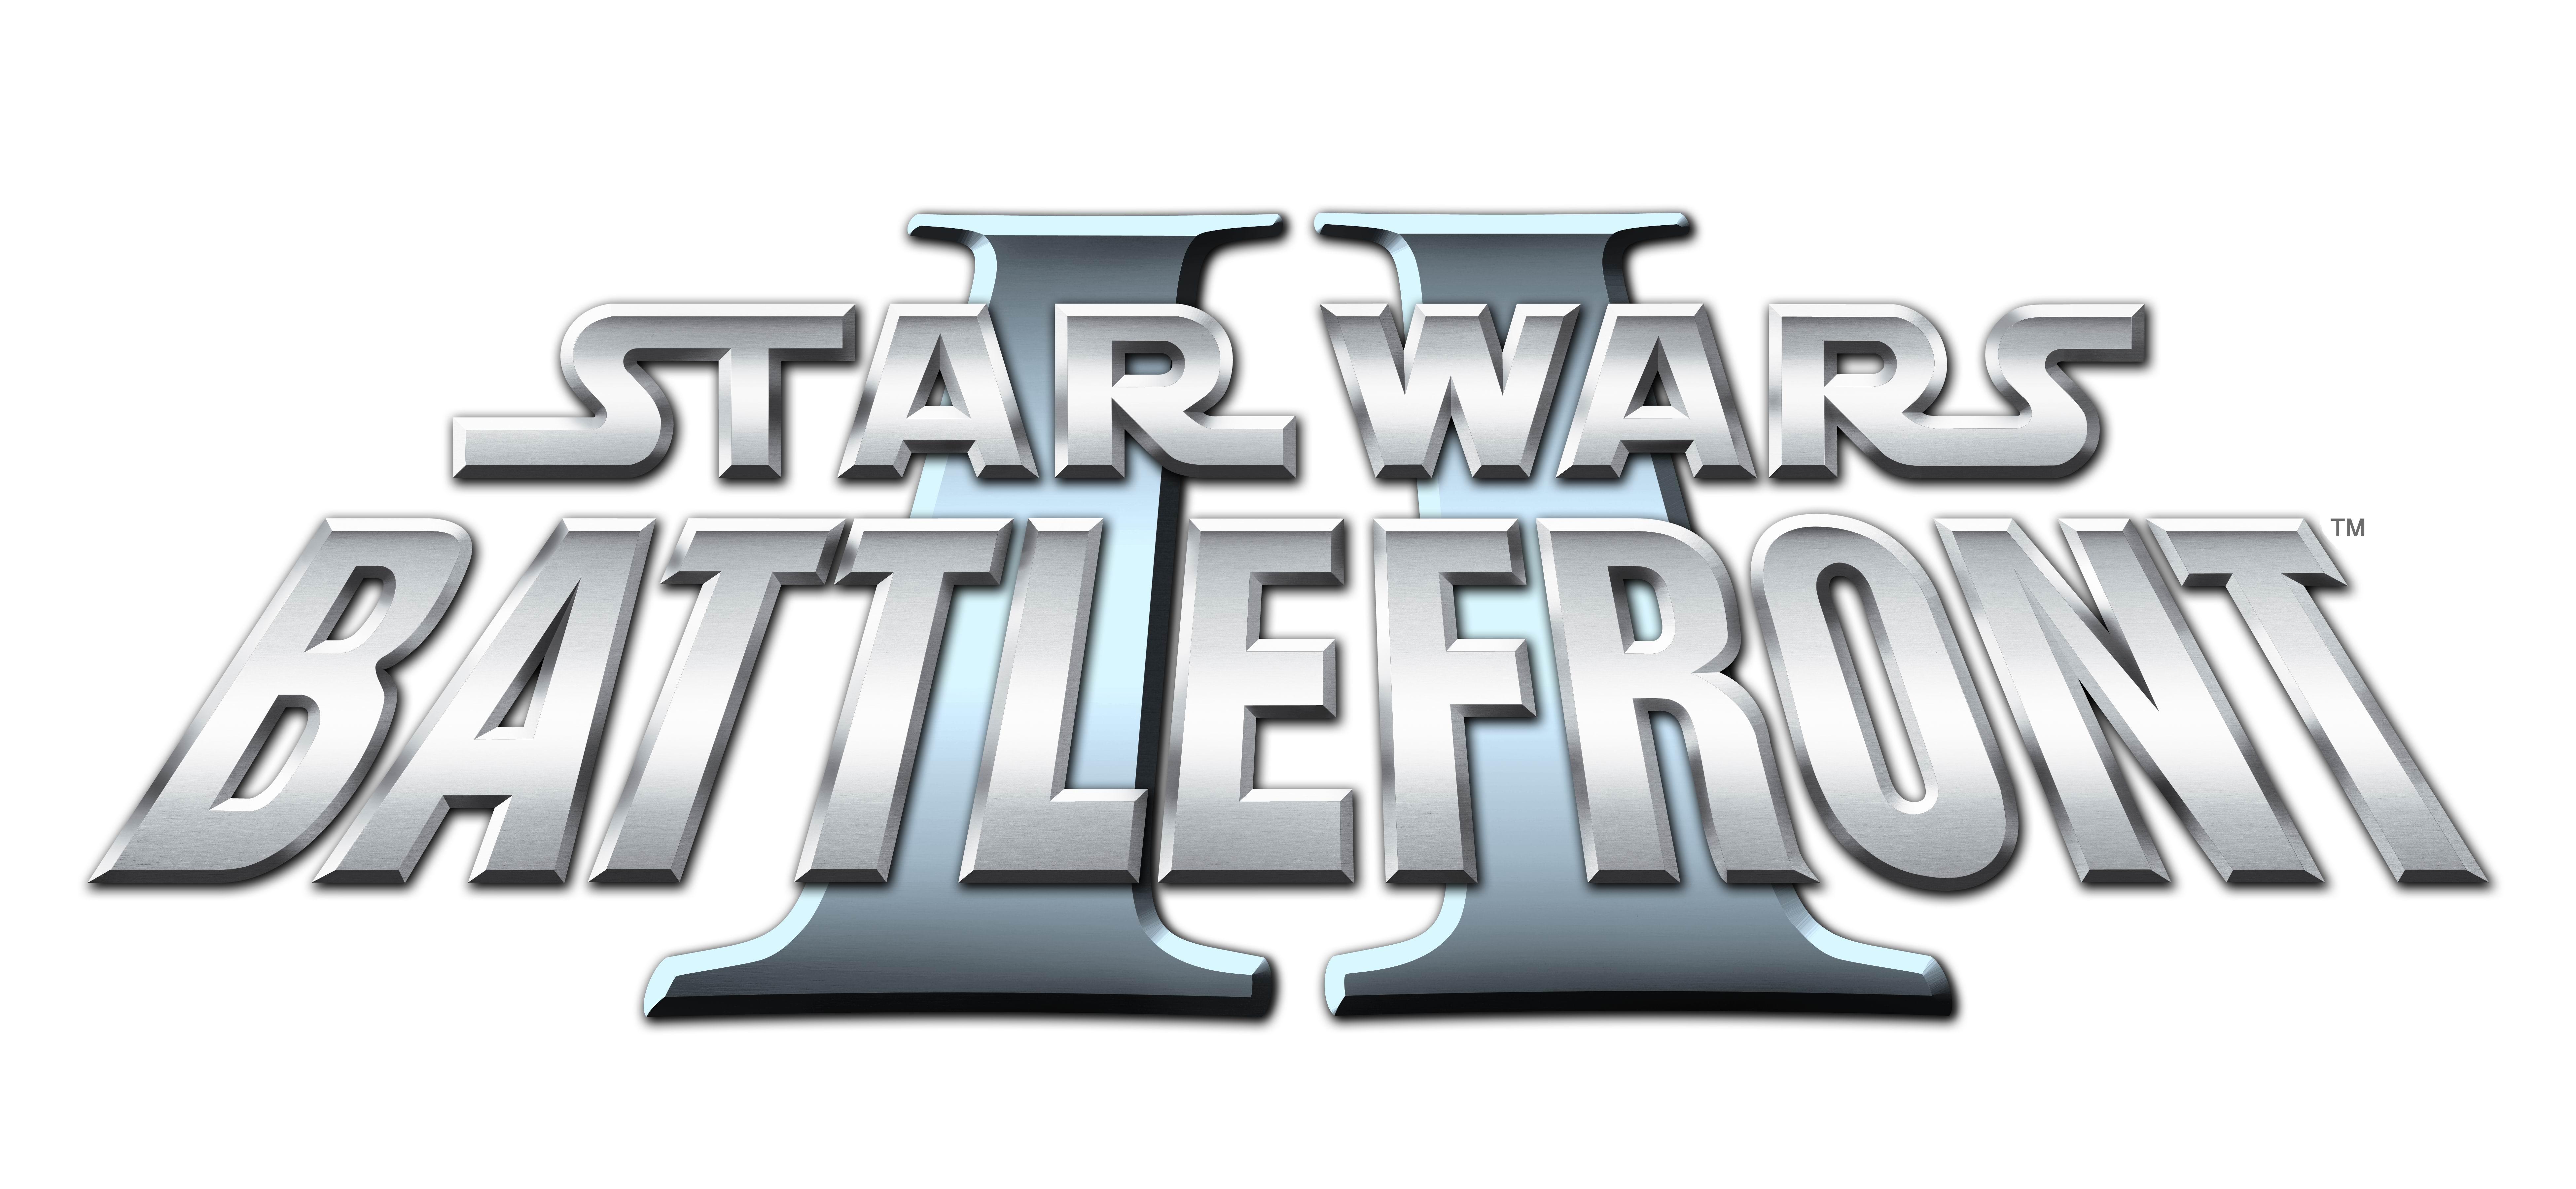 Battlefront Logo - File:Logo Star Wars Battlefront II.jpg - Wikimedia Commons